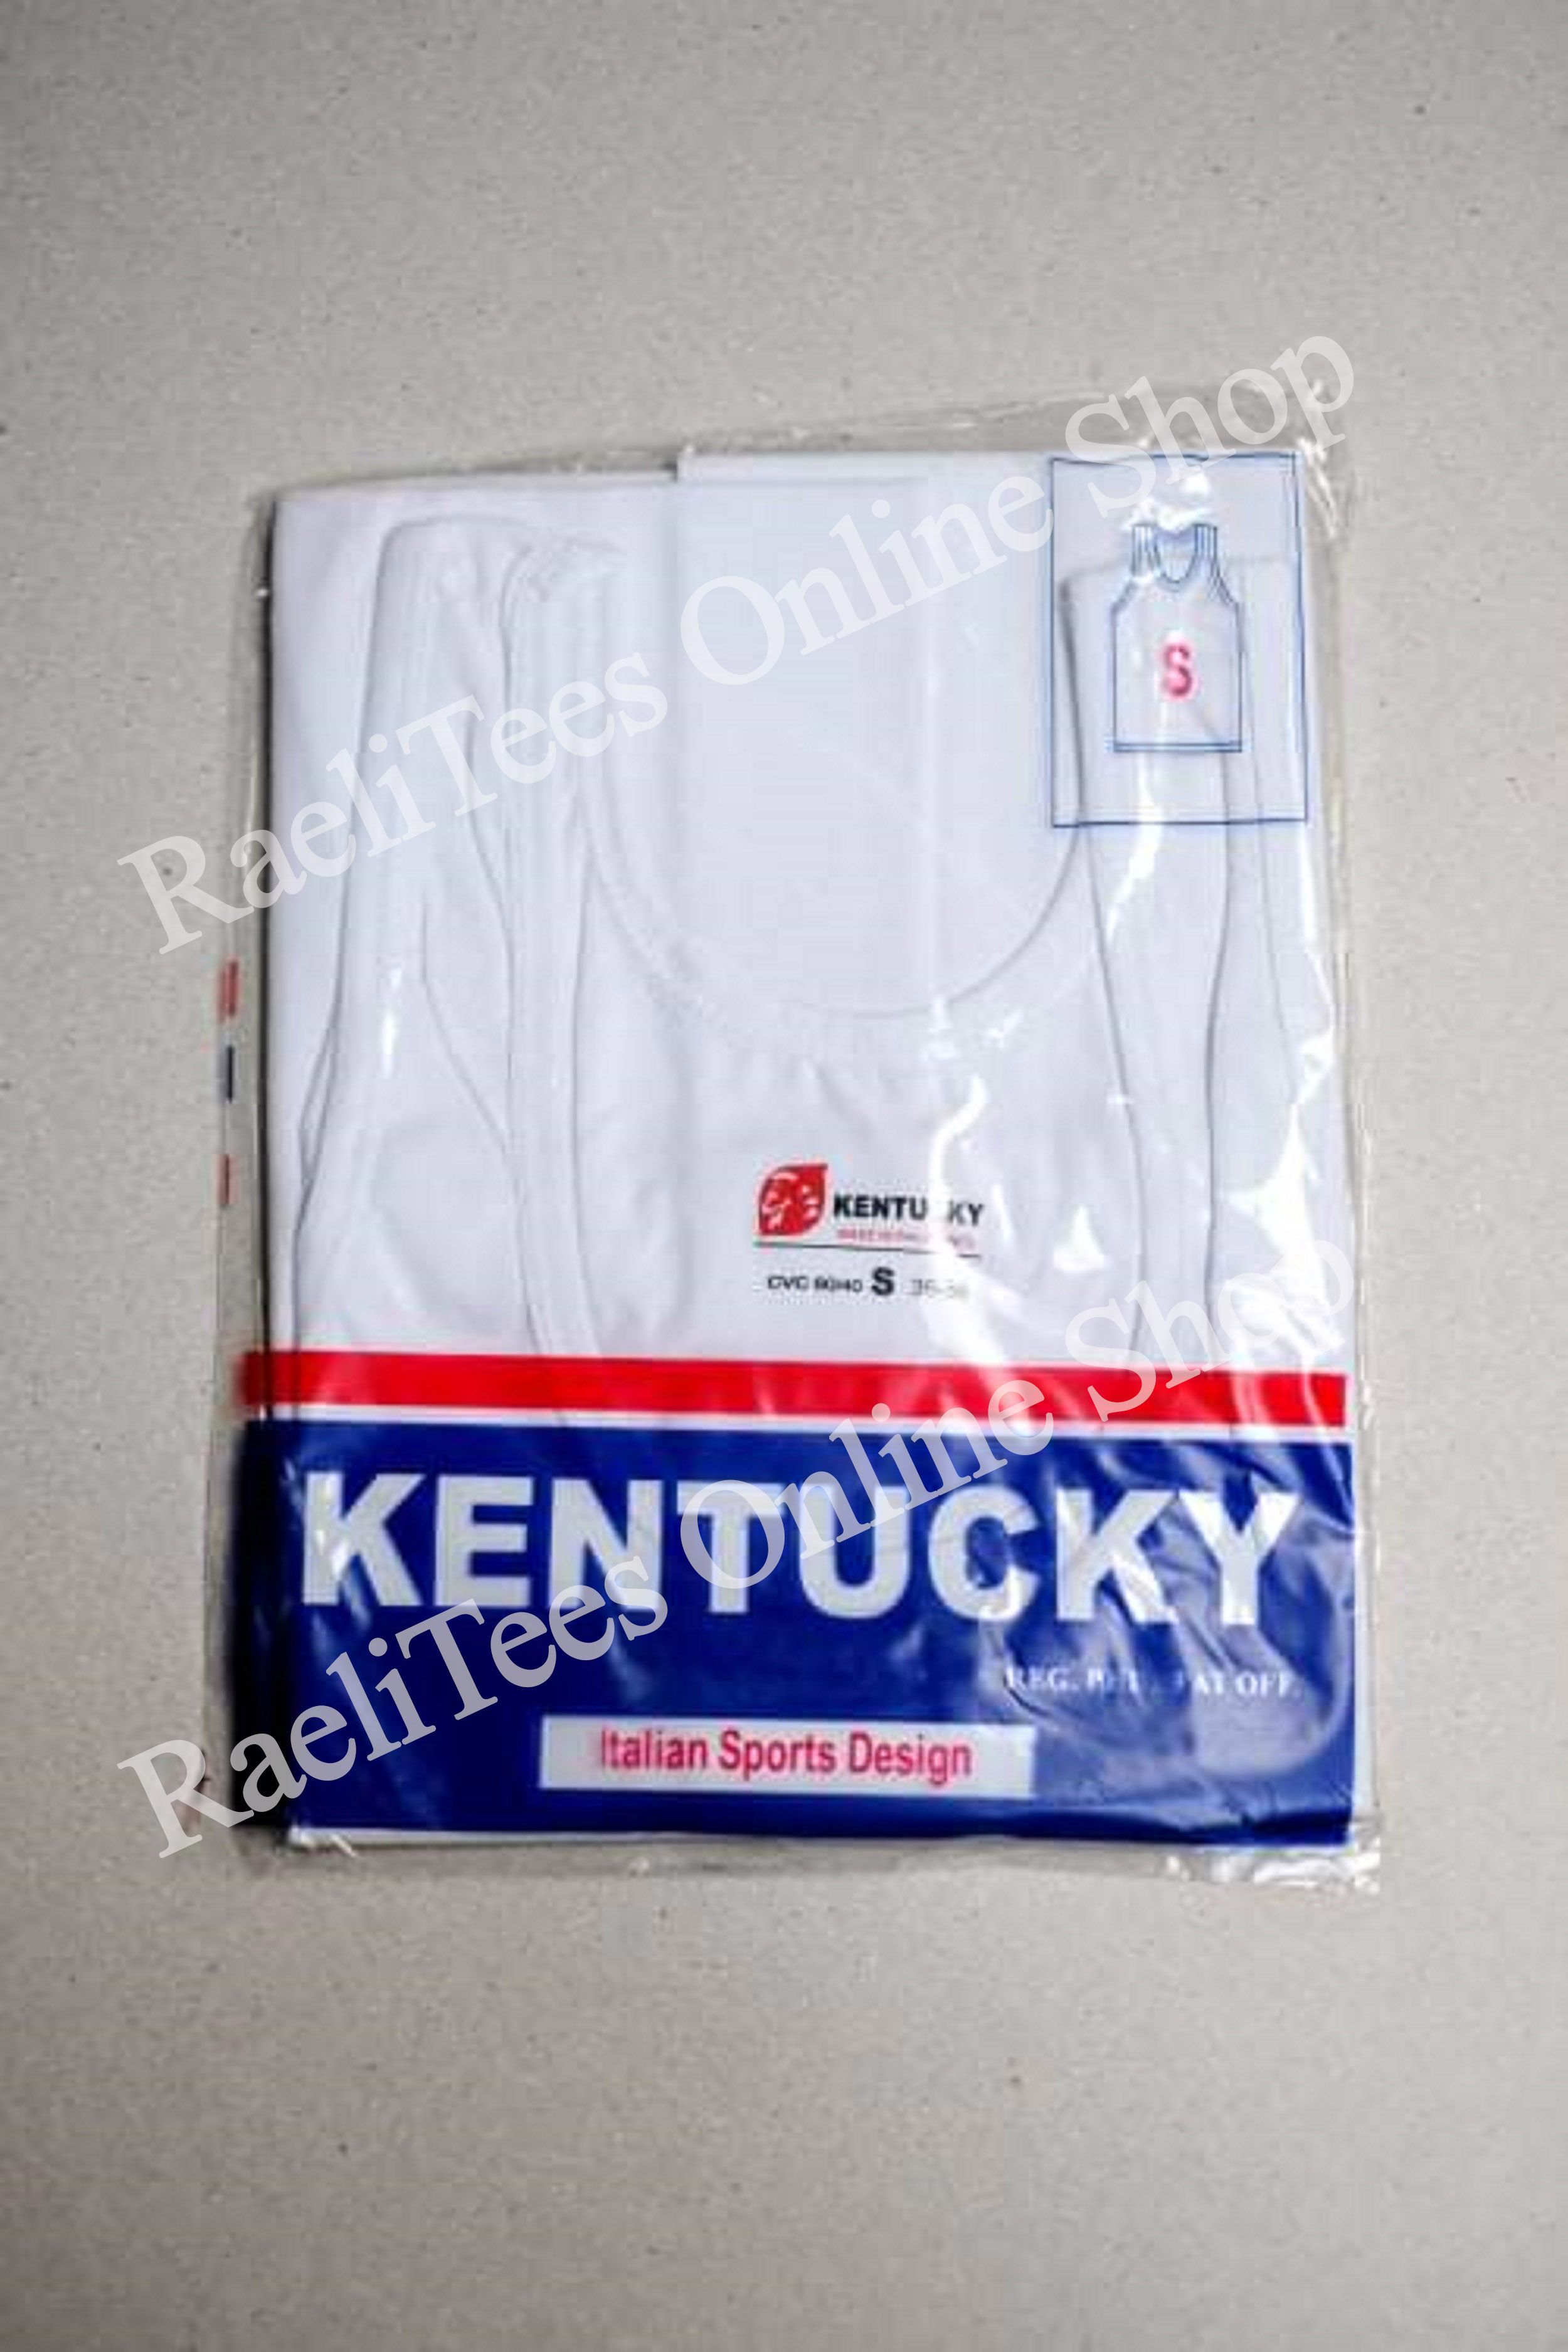 Kentucky Plain White Sleeveless Round Neck Shirt for Adult